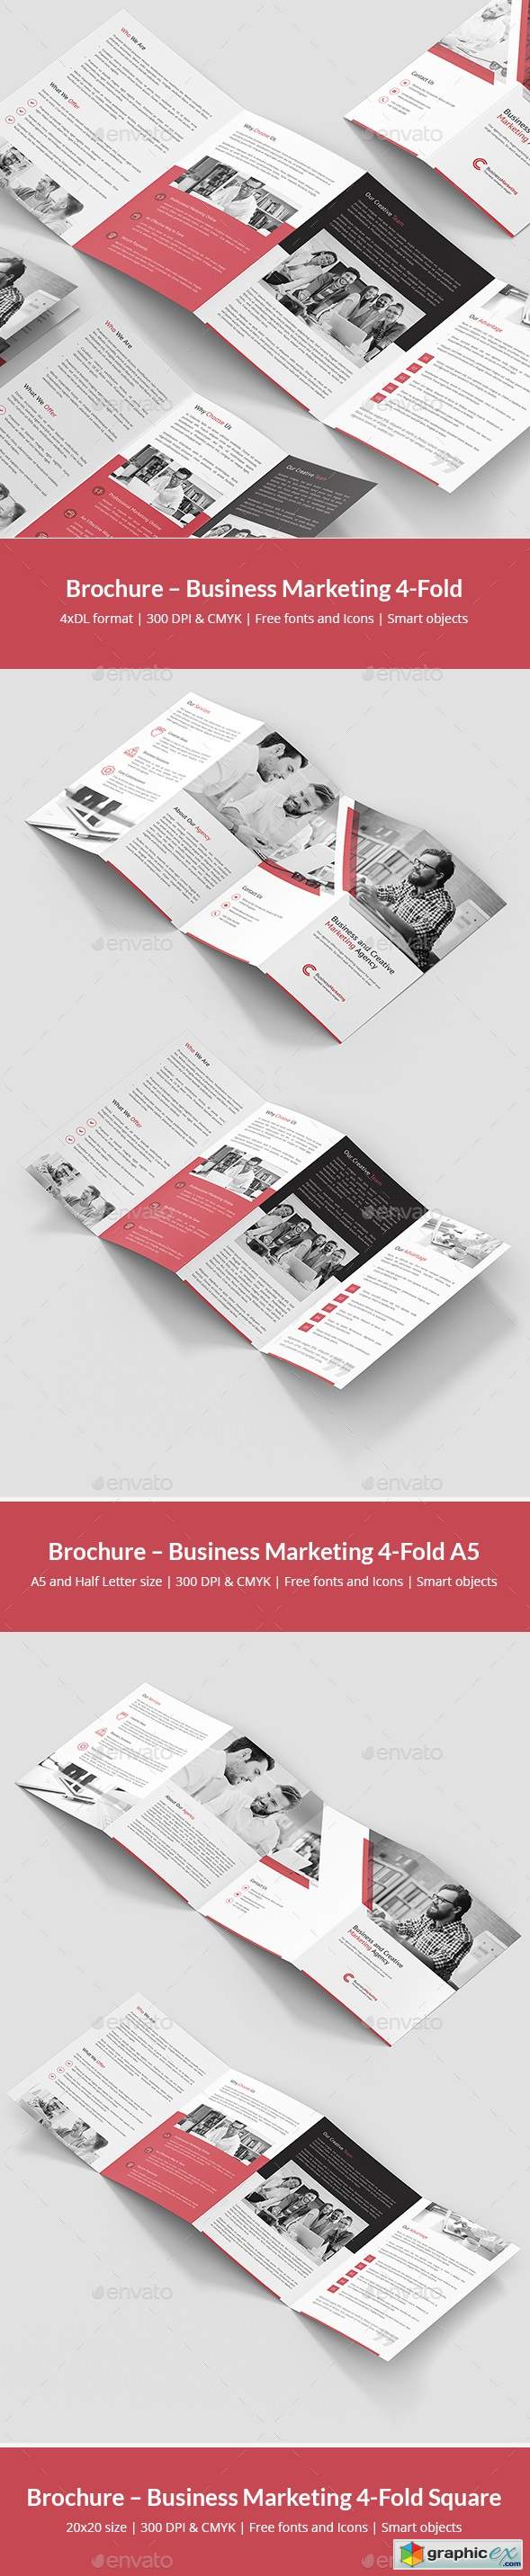 Business Marketing – Brochures Bundle Print Templates 10 in 1